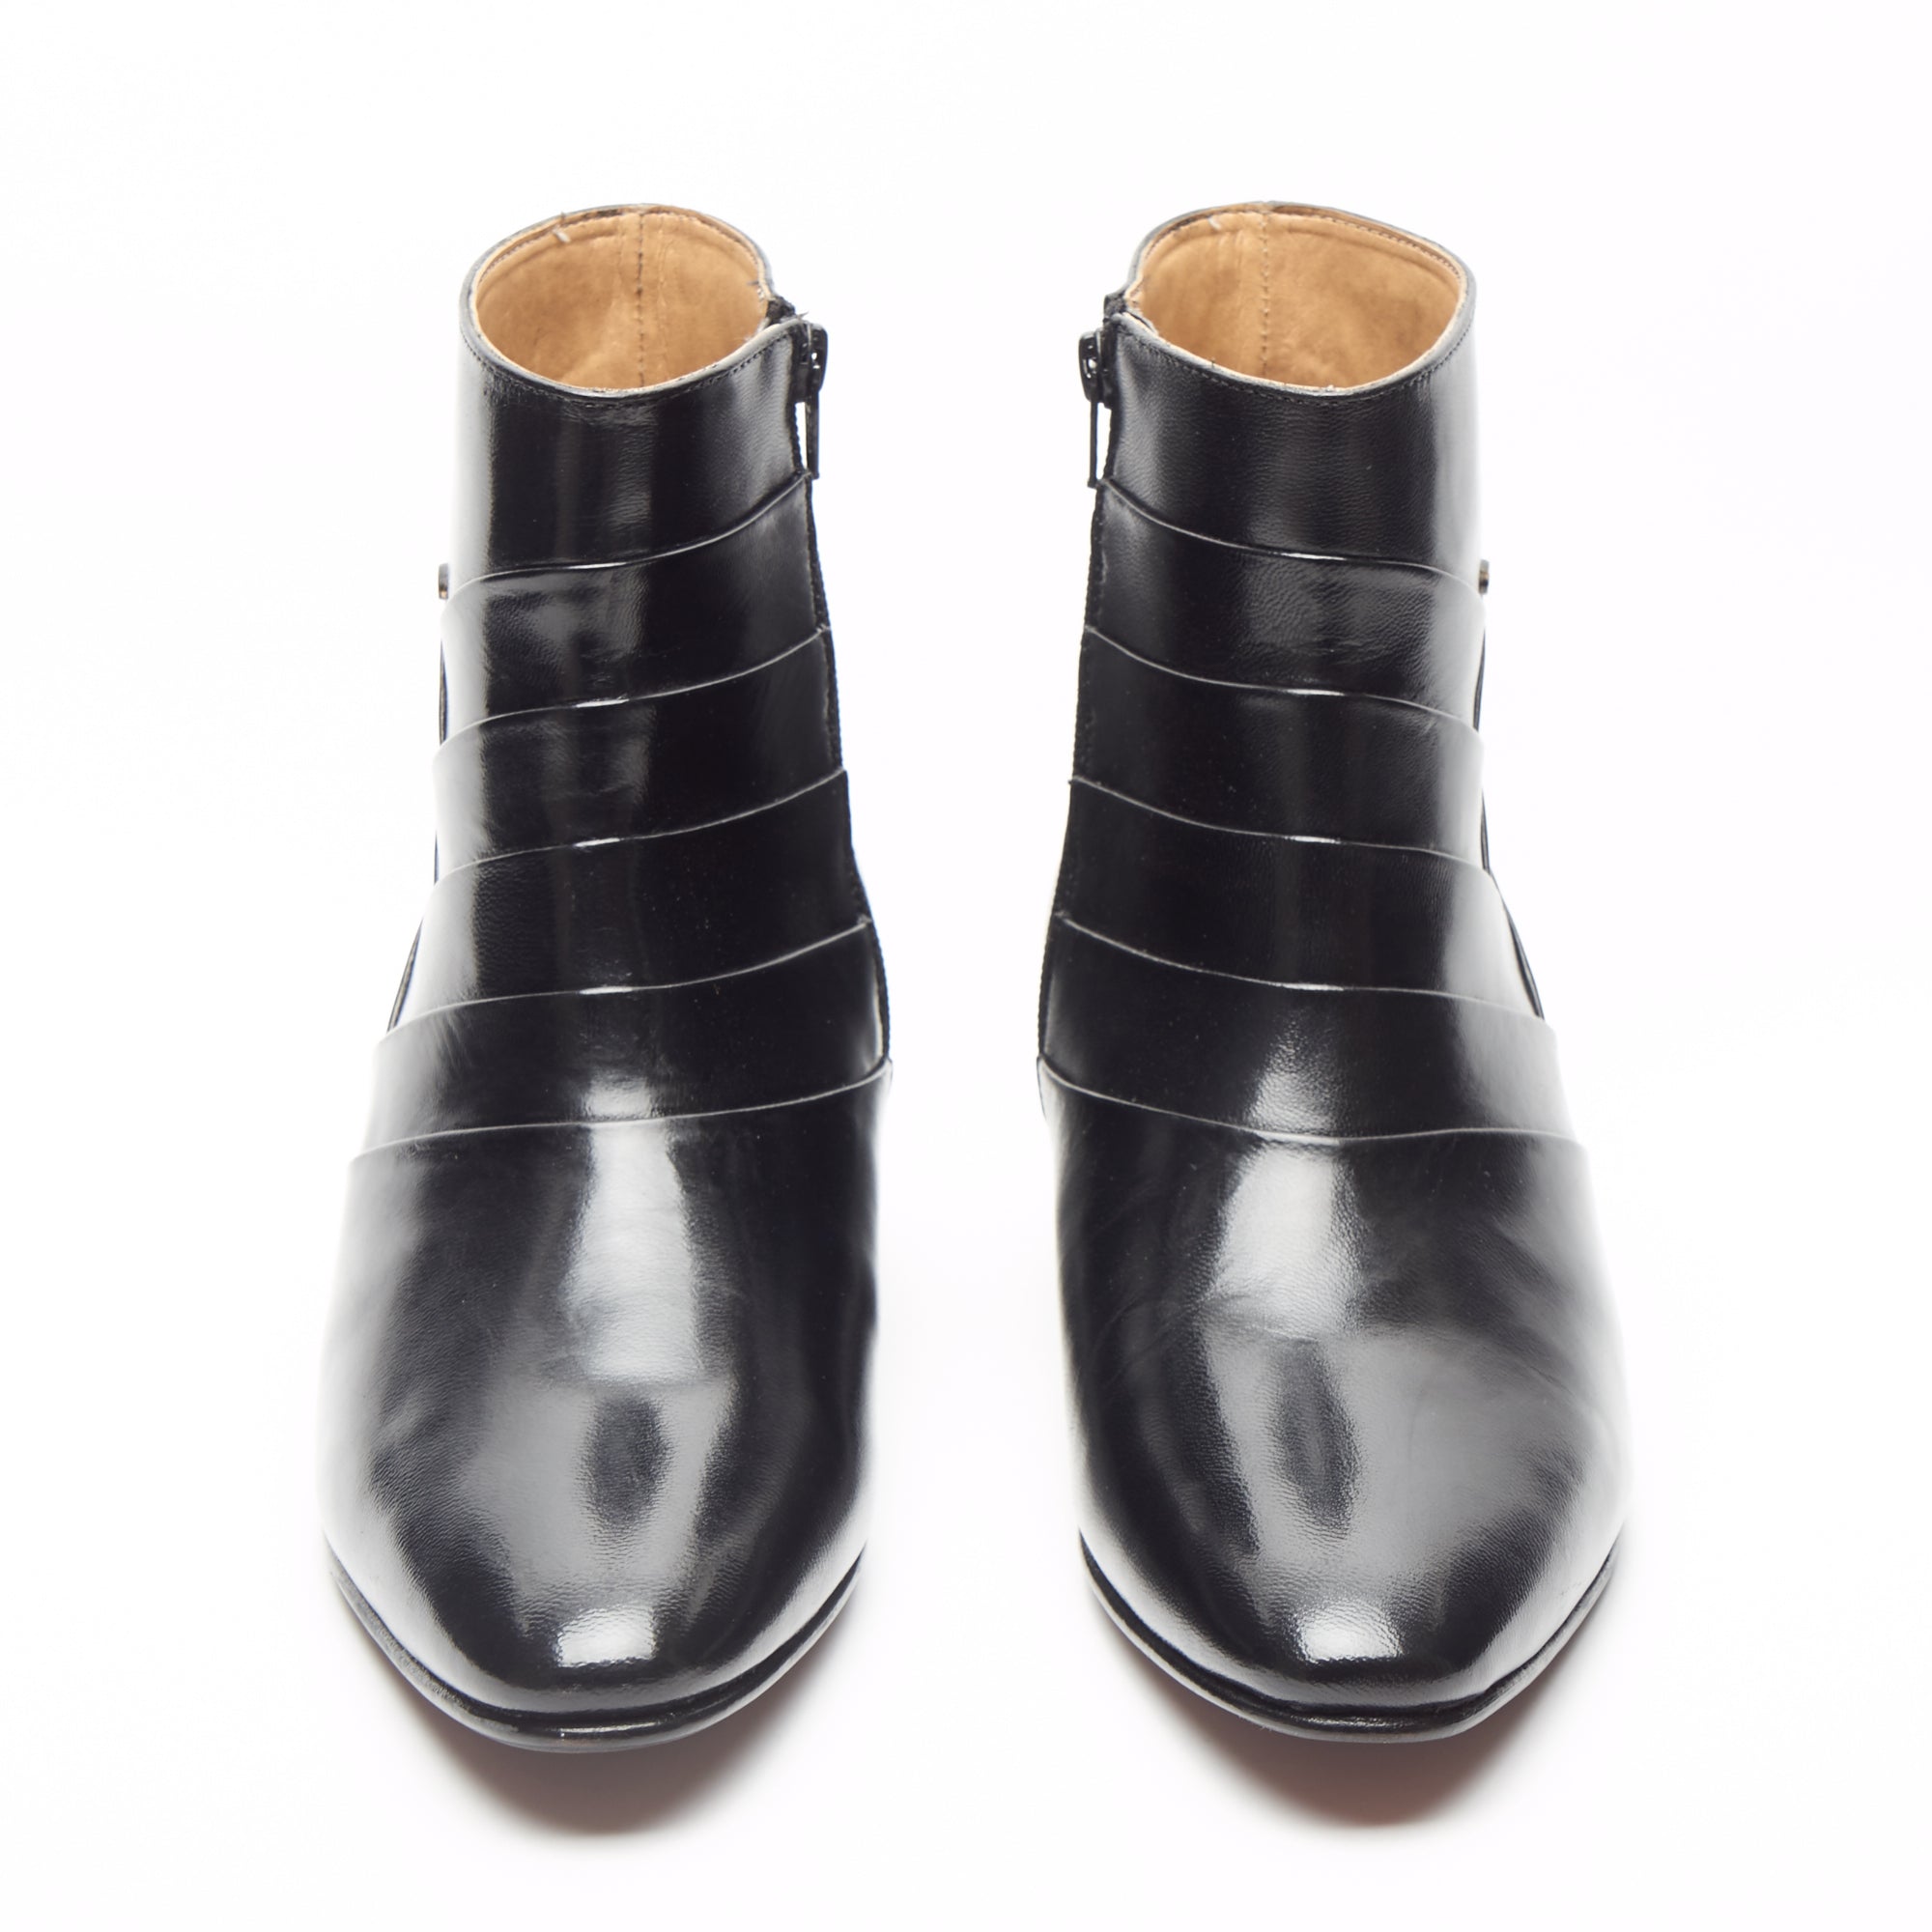 Mens Cuban Heel Leather Boots - 26288 Black